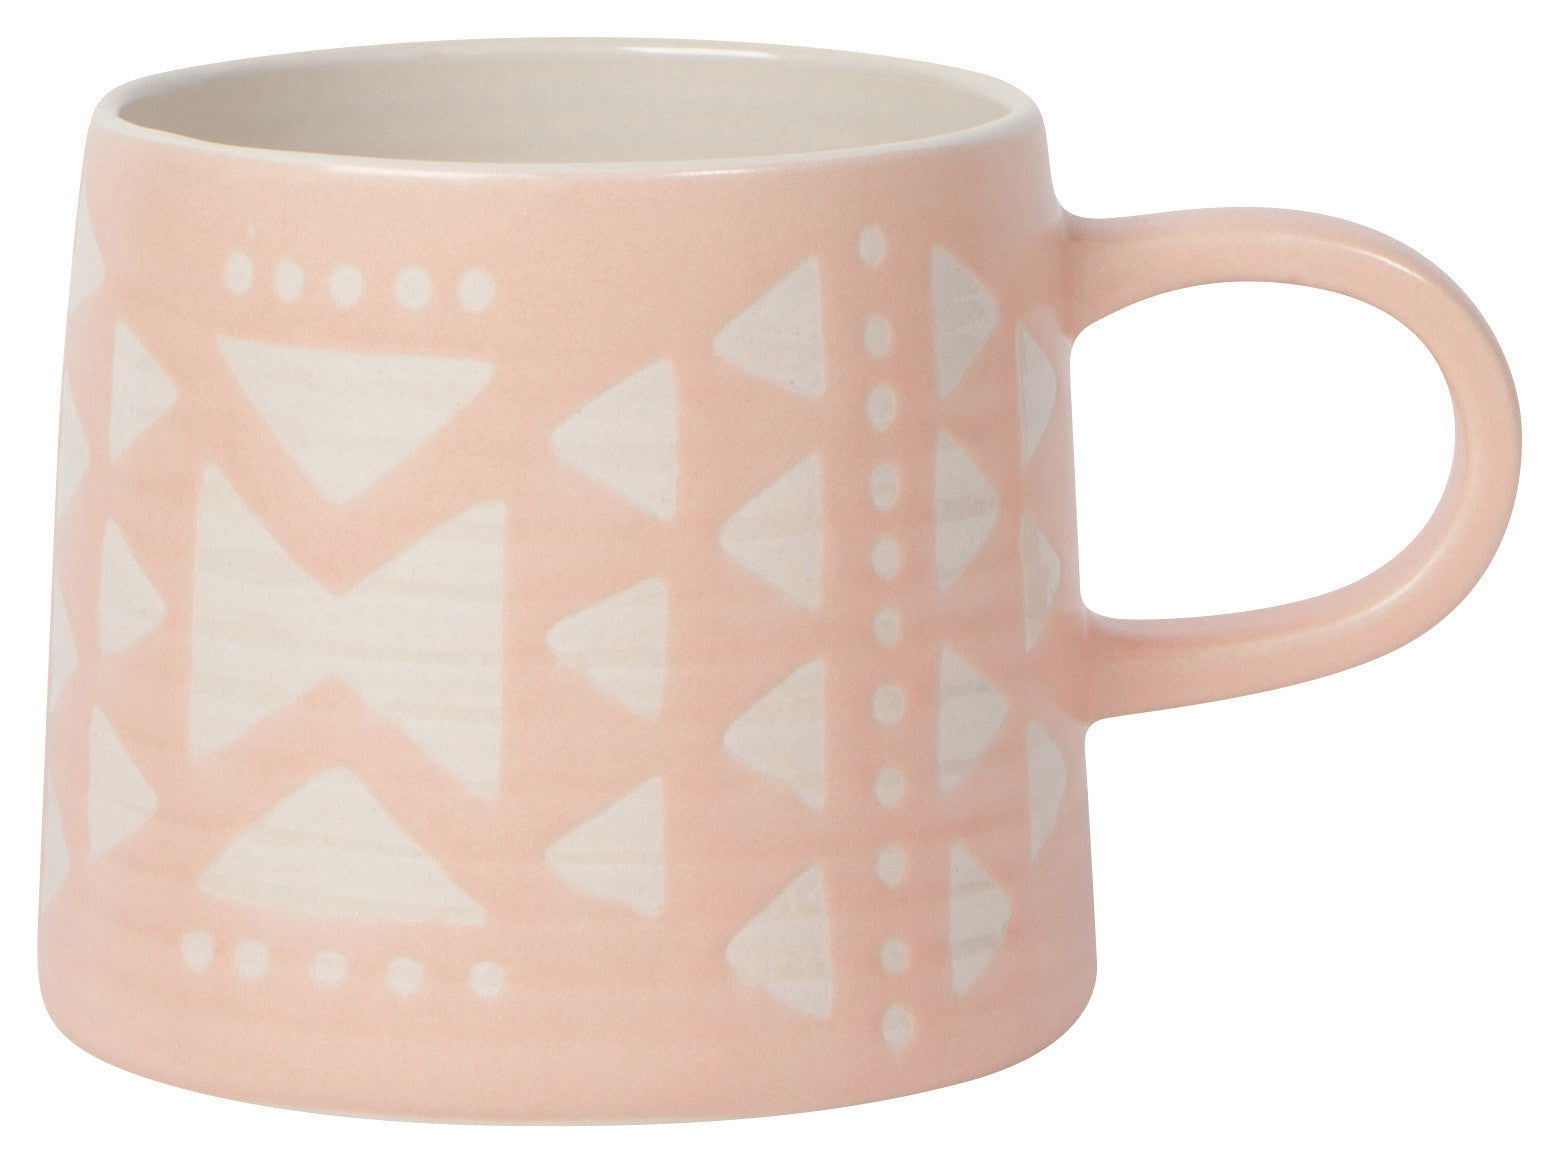 Imprint Mug - Pink Danica - Oscar & Libby's